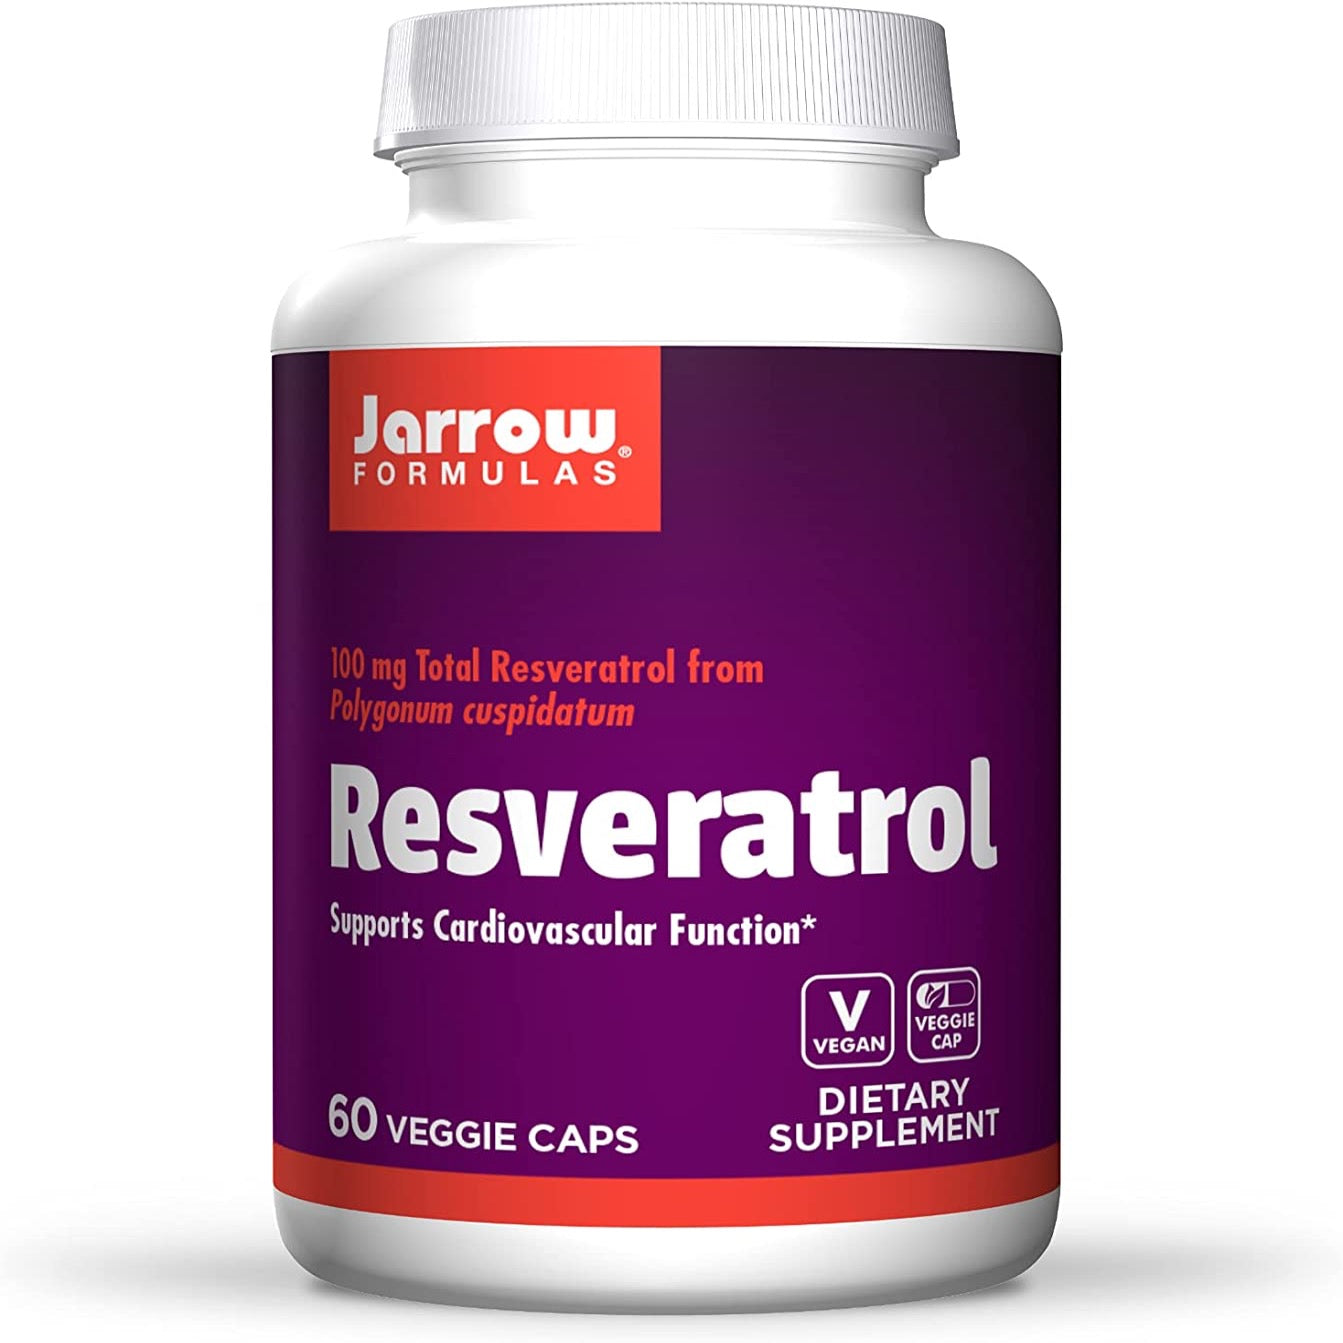 Jarrow Formulas Resveratrol 100mg 60 Veggie Caps.